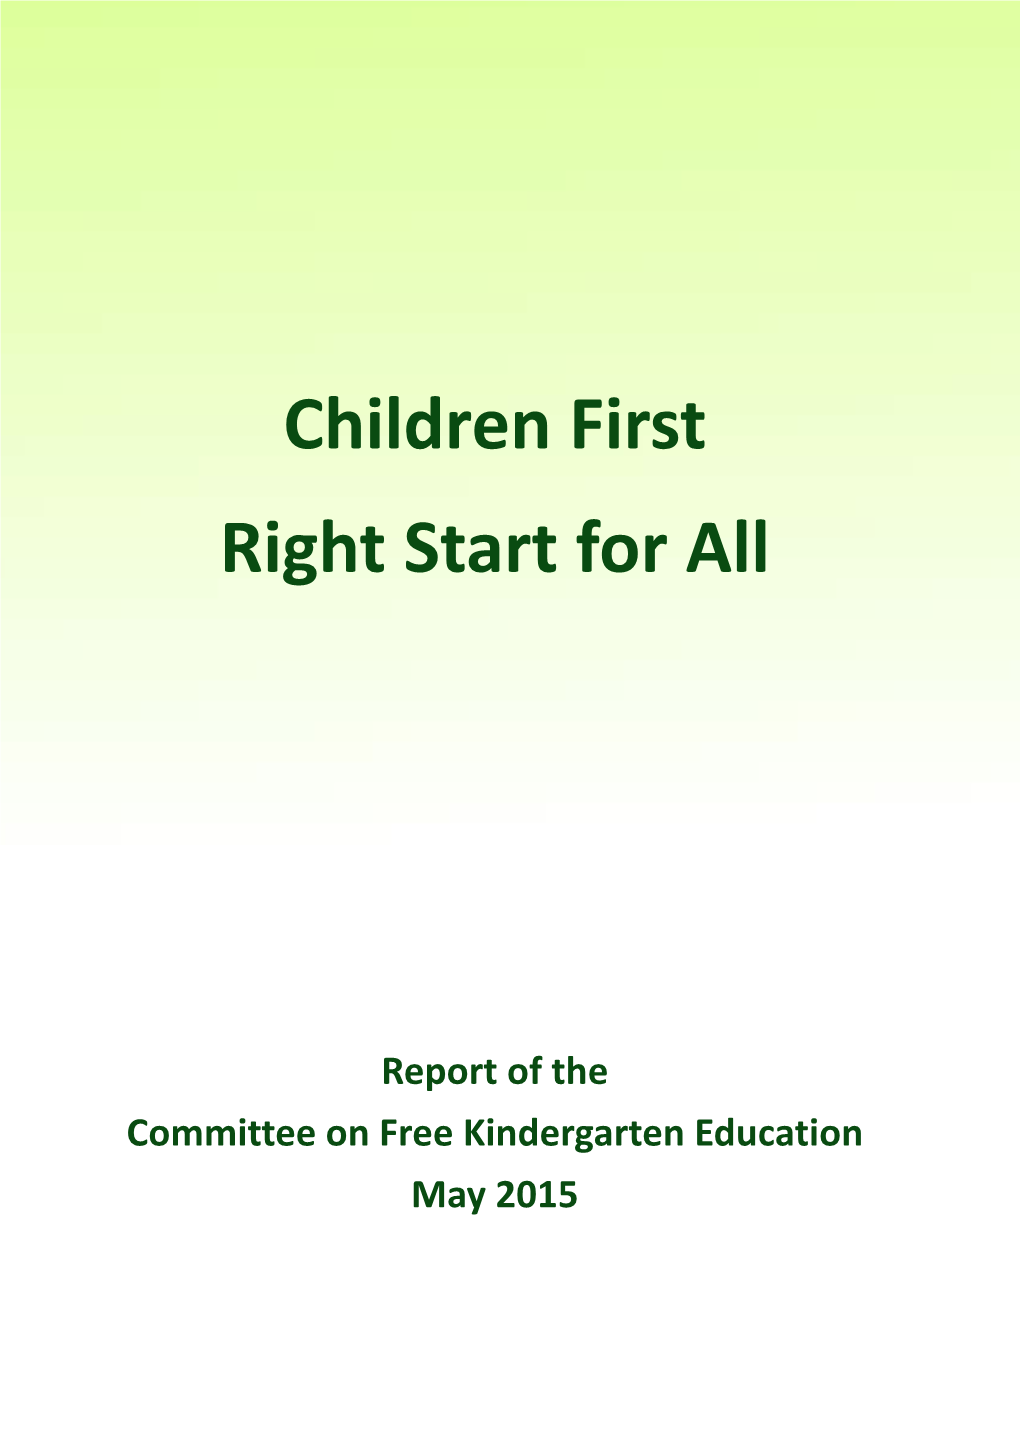 Children First Right Start for All